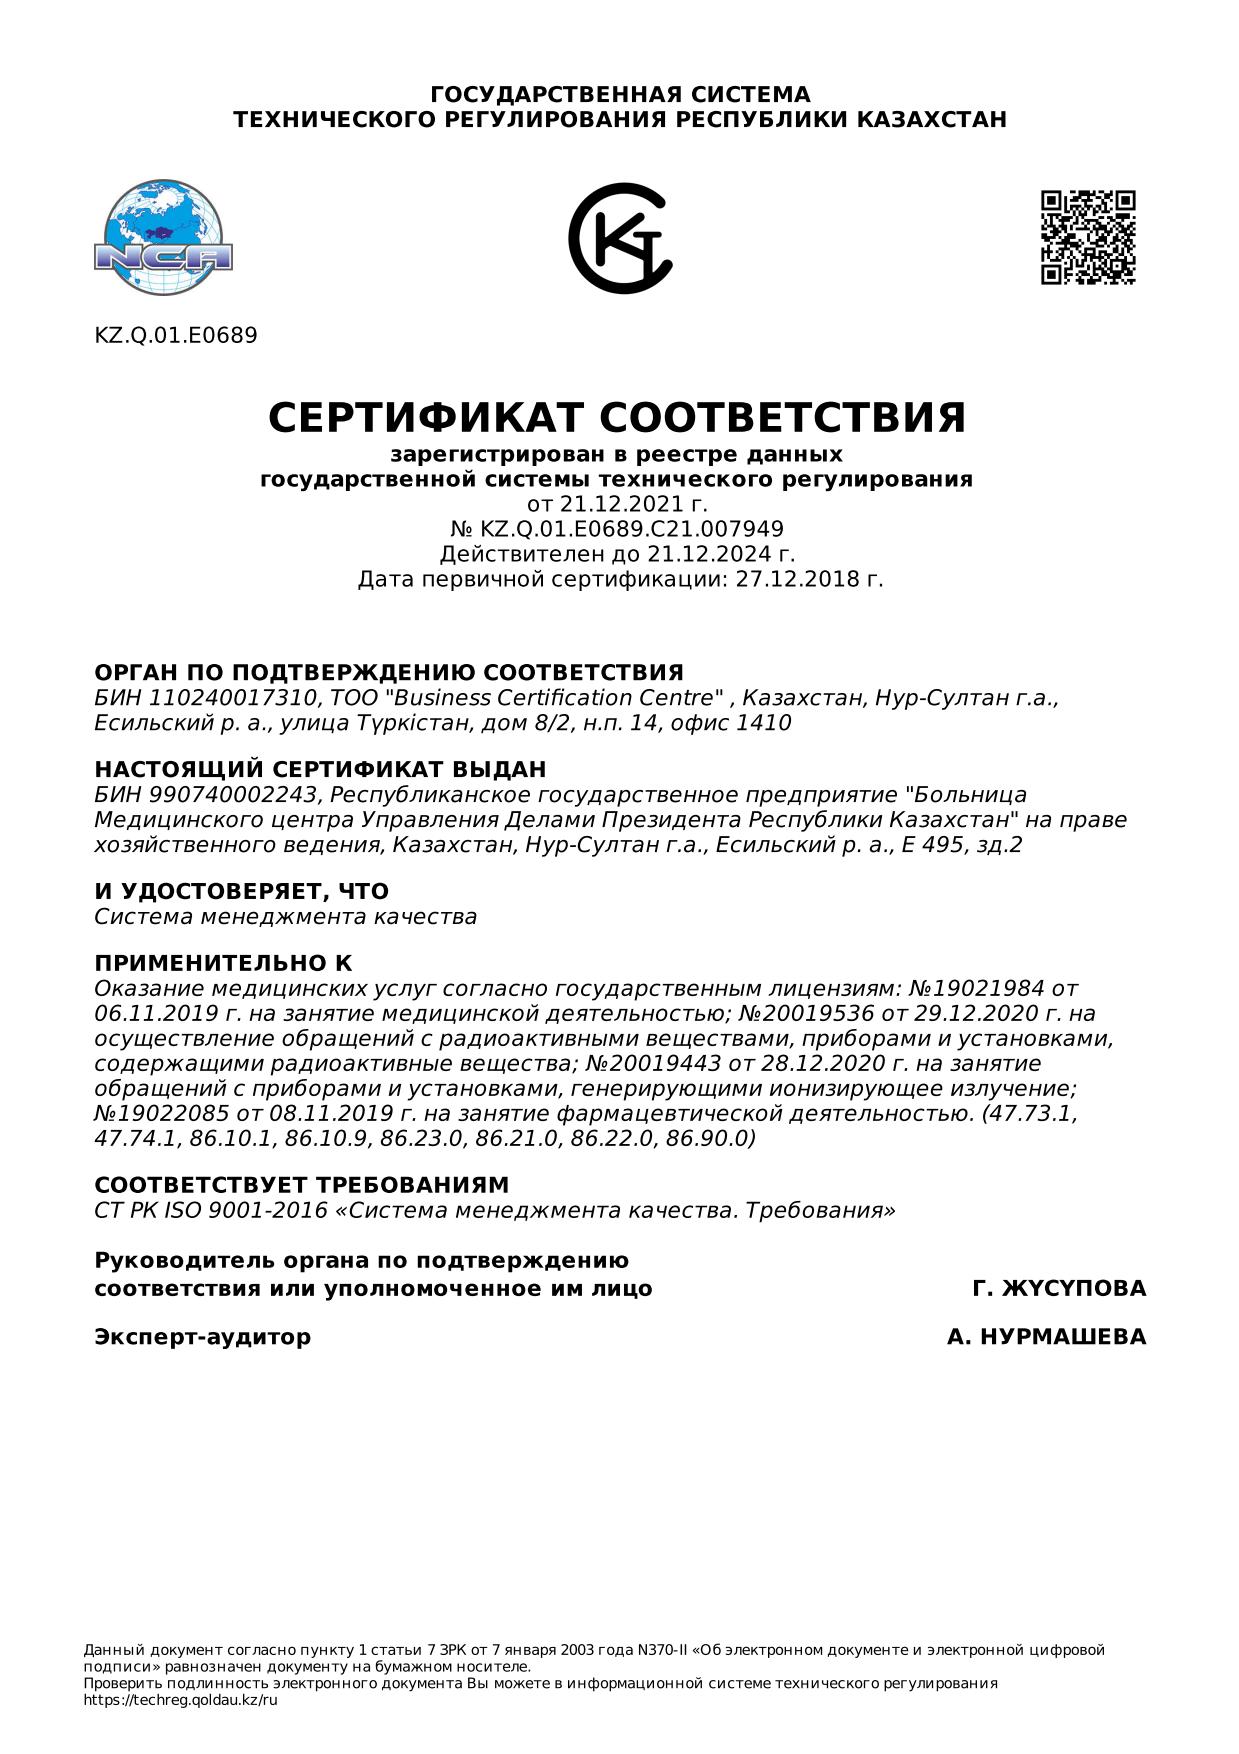 Сертификат соответствия СТ РК ISO 9001-2016